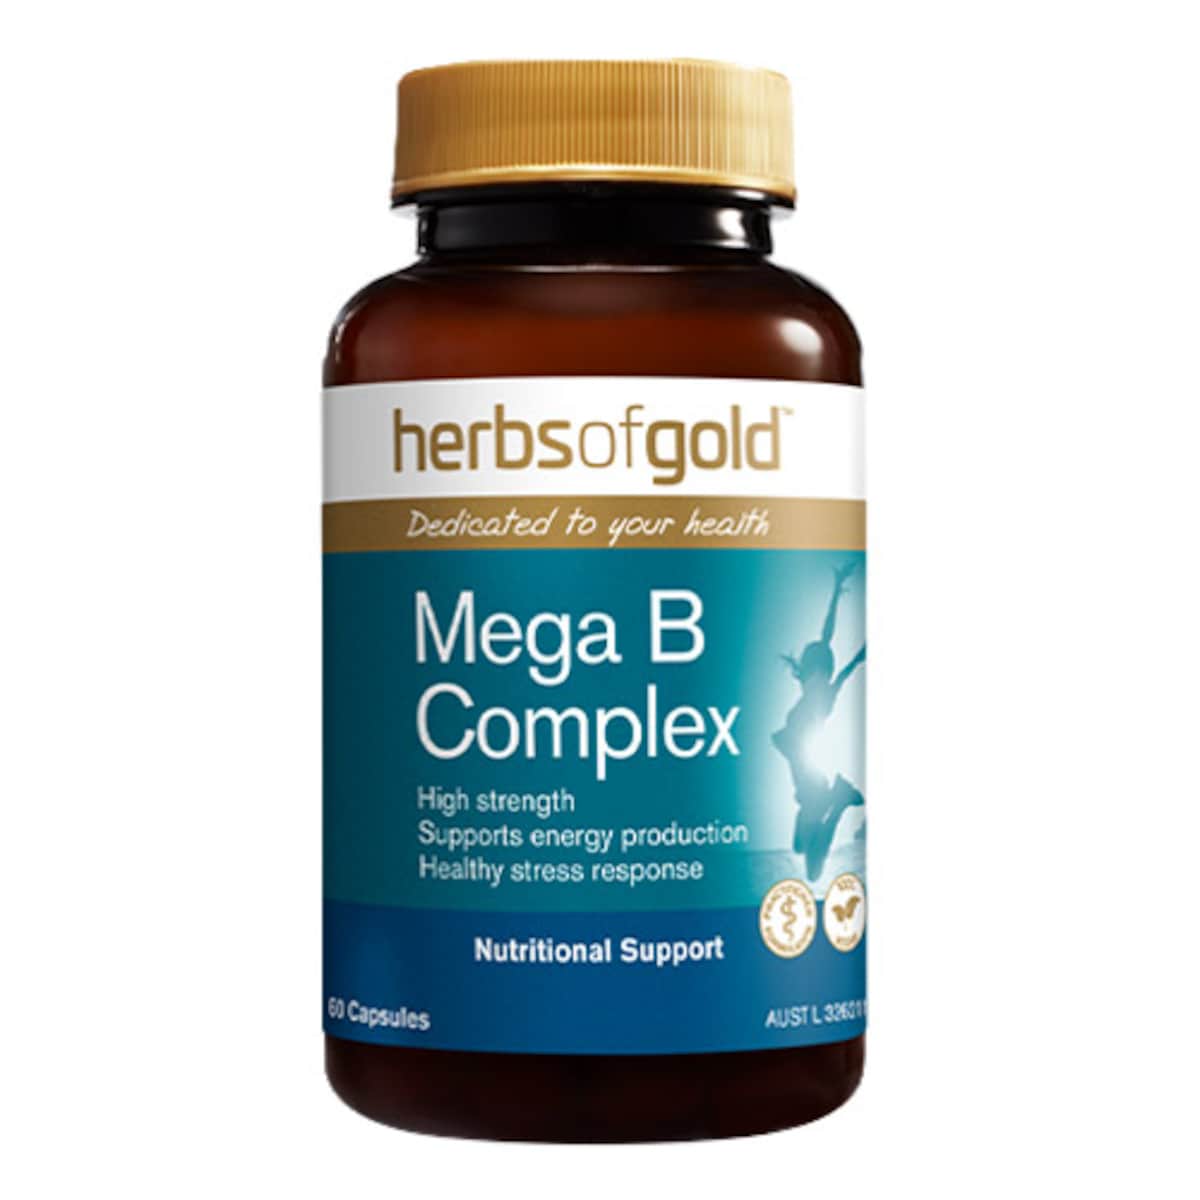 Herbs of Gold Mega B Complex 60 Capsules Australia